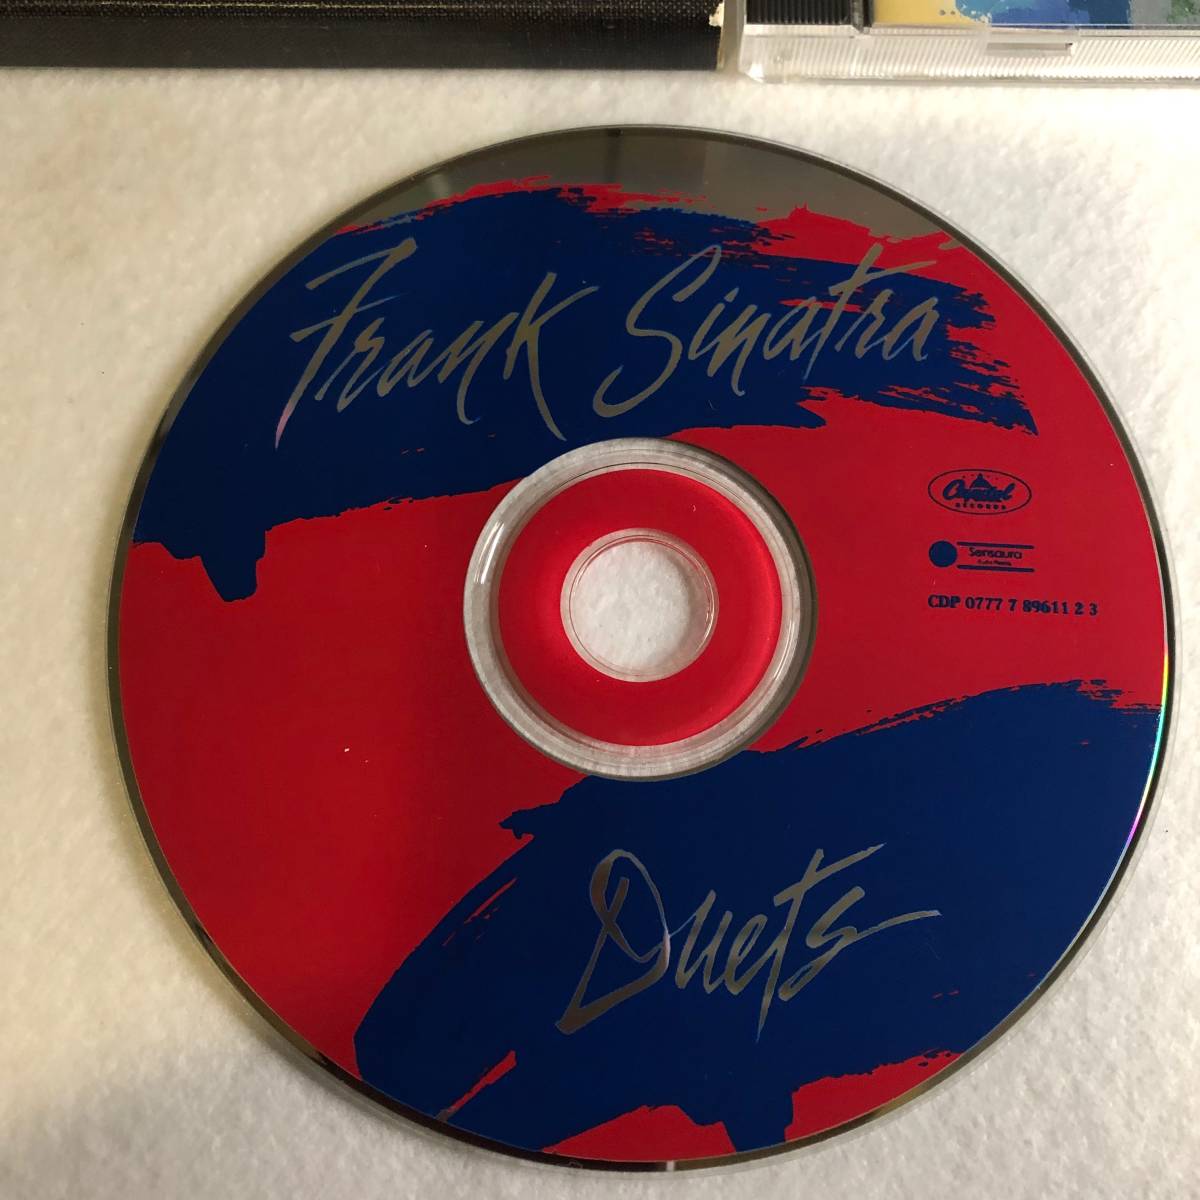  中古CD Frank Sinatra Duets US盤 Capitol CDP 0777 789611 2 3 個人所有 _画像2